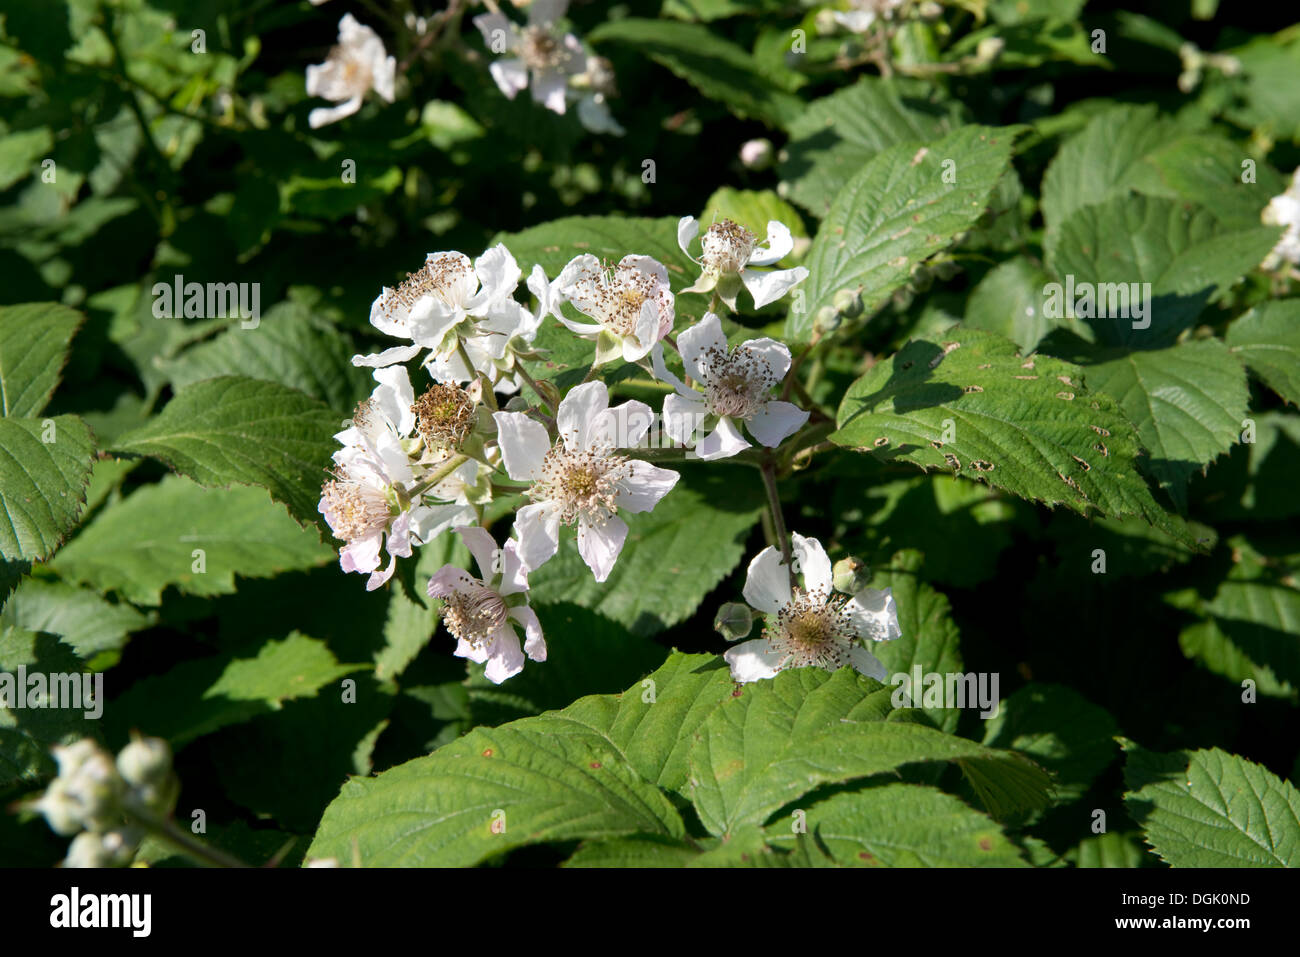 Flowers of blackberry or bramble, Rubus fruticosus Stock Photo